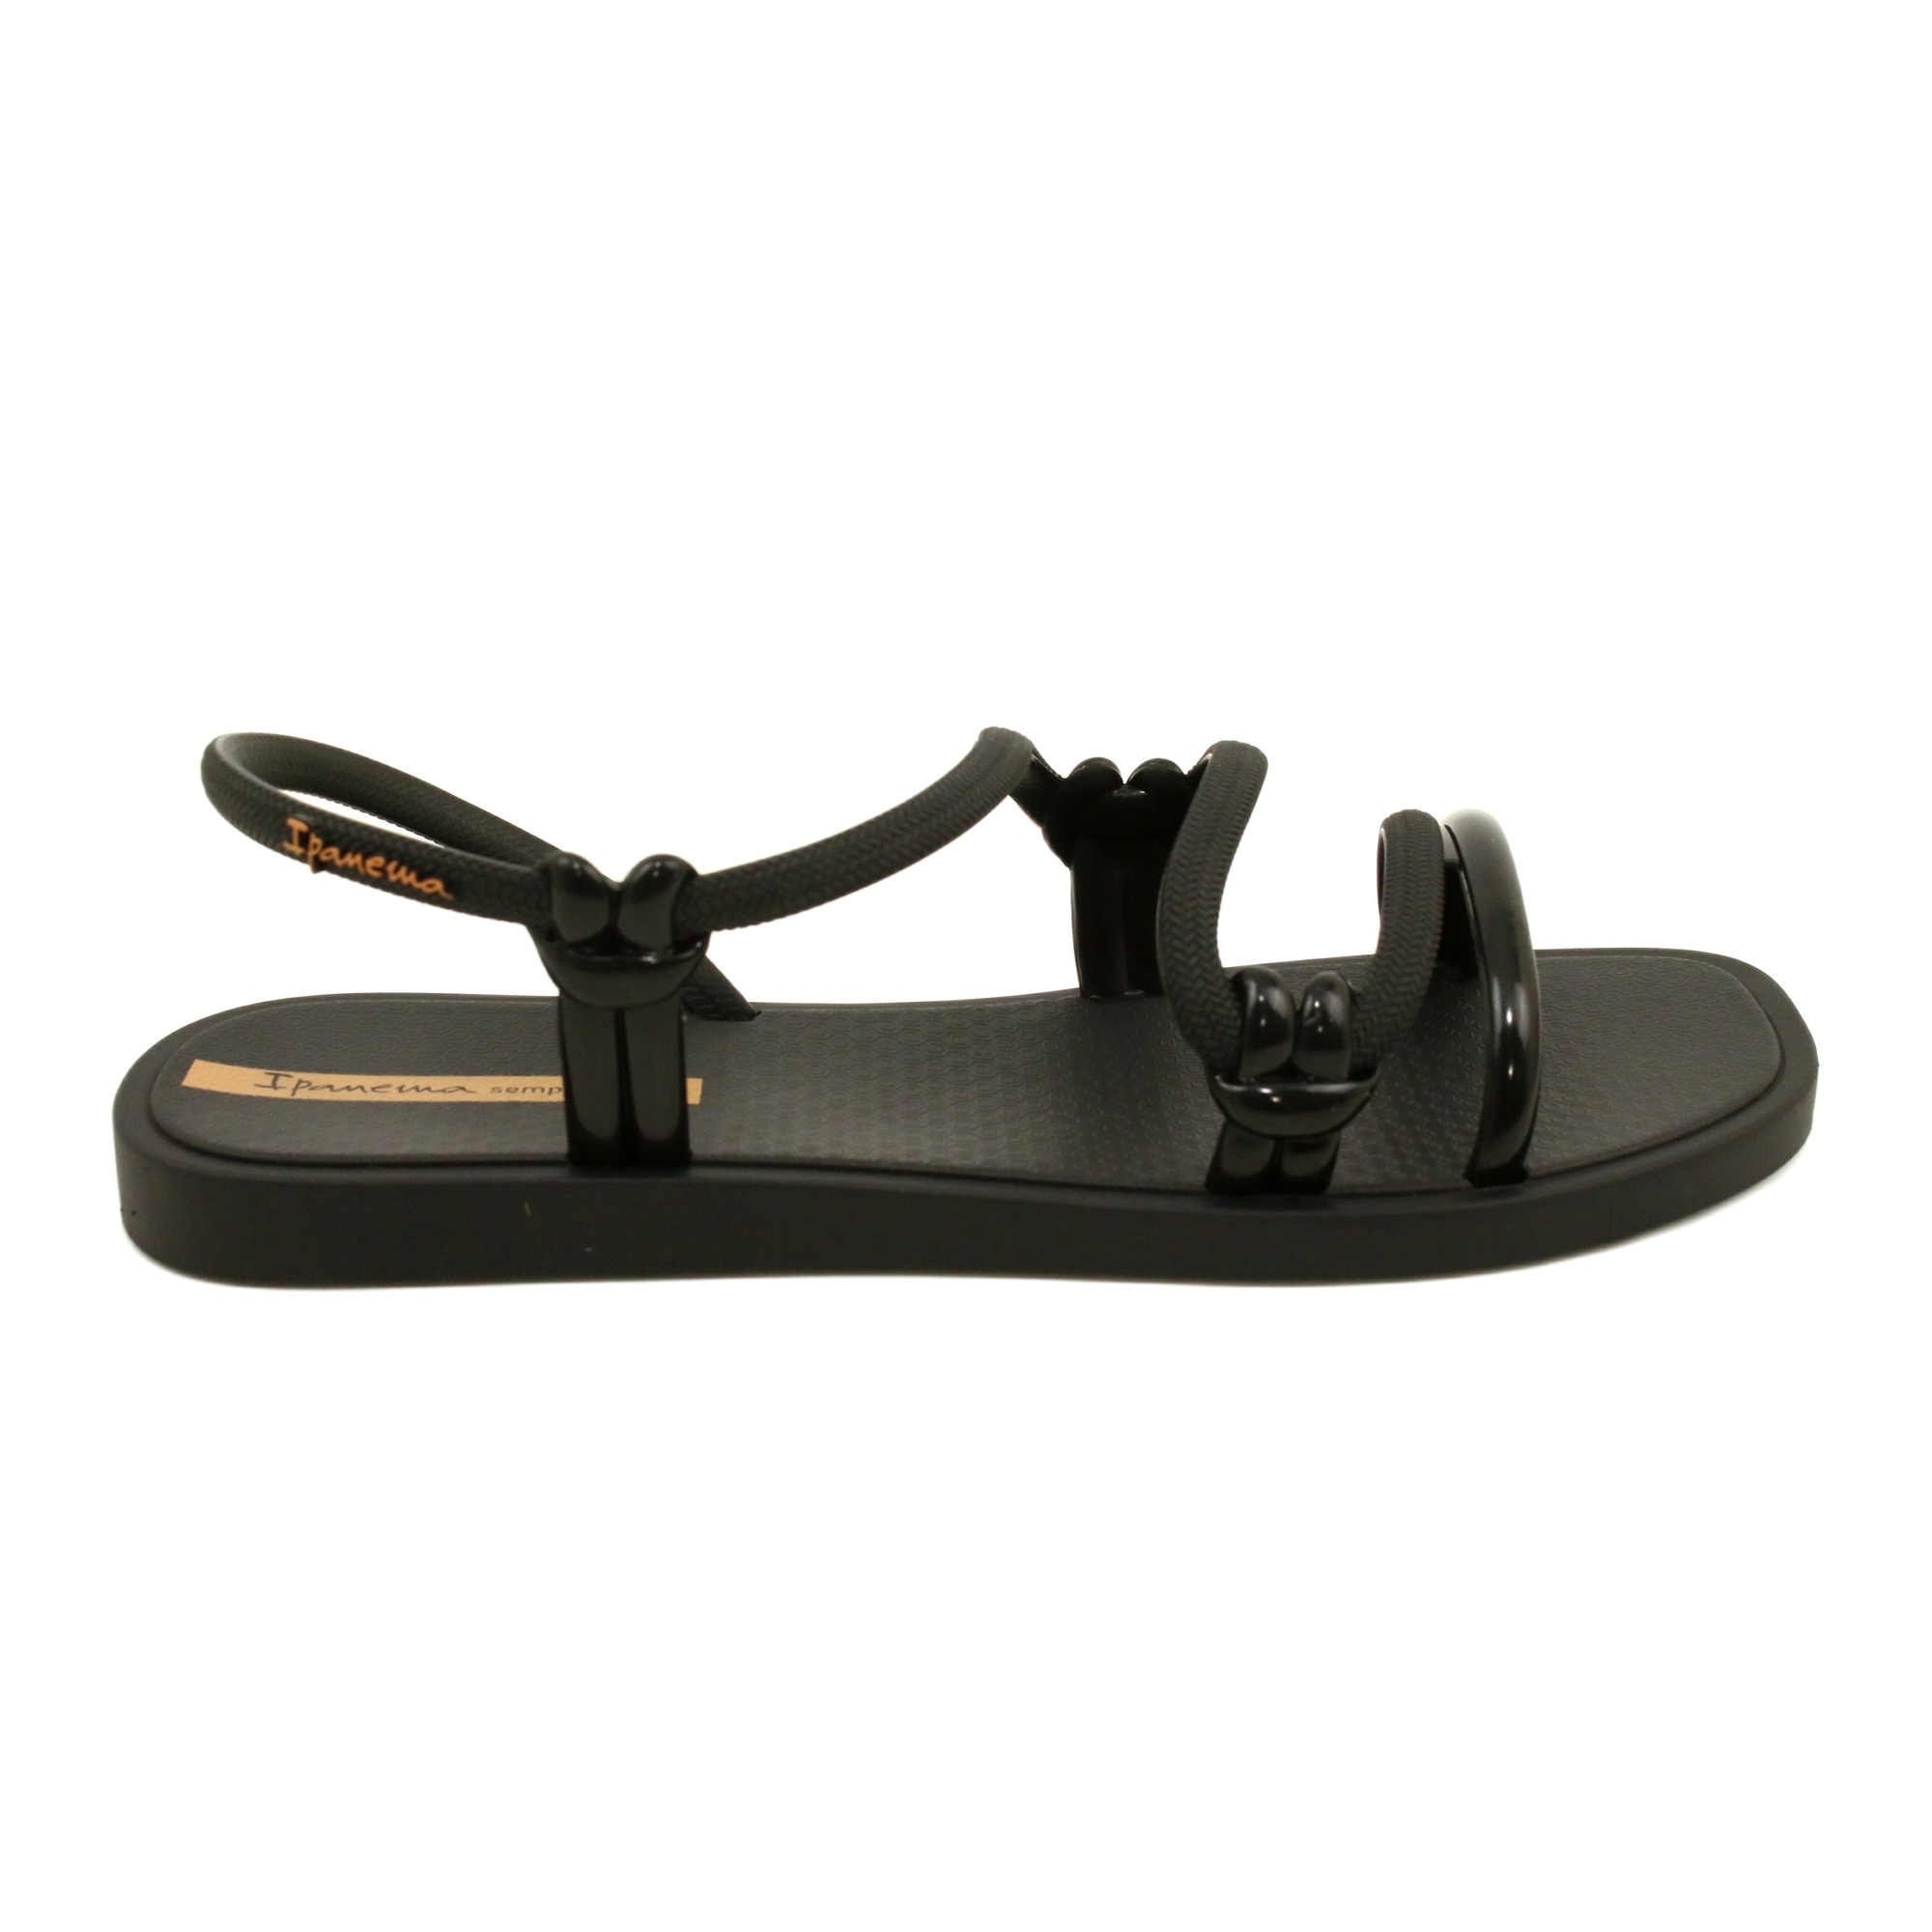 New Mens Flip Flops Summer Pool Sliders Beach Sandals Toe Post Black Ipanema  | eBay